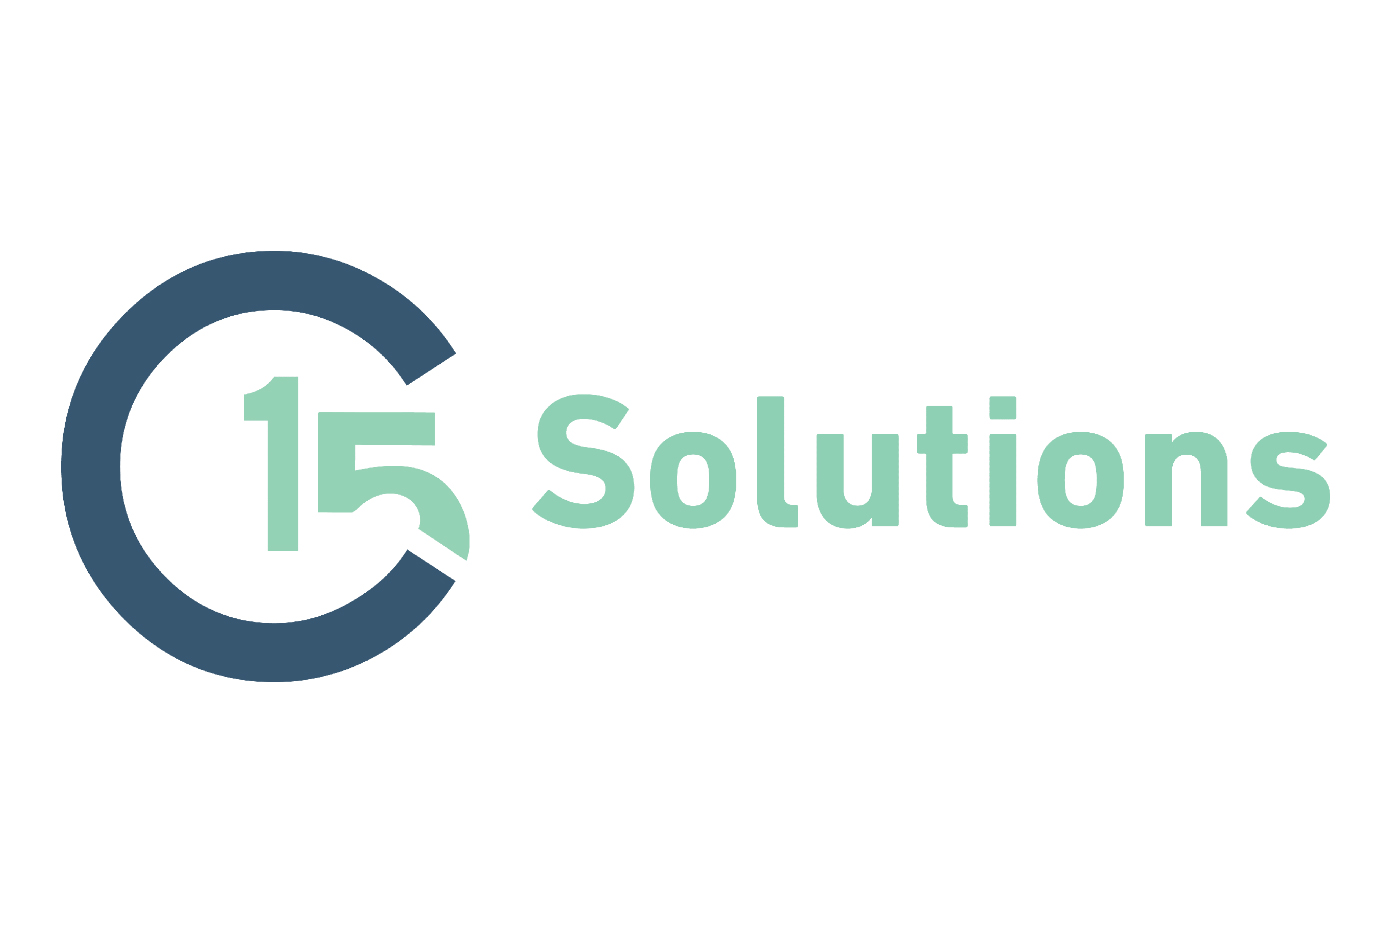 C15 Solutions, Inc. (